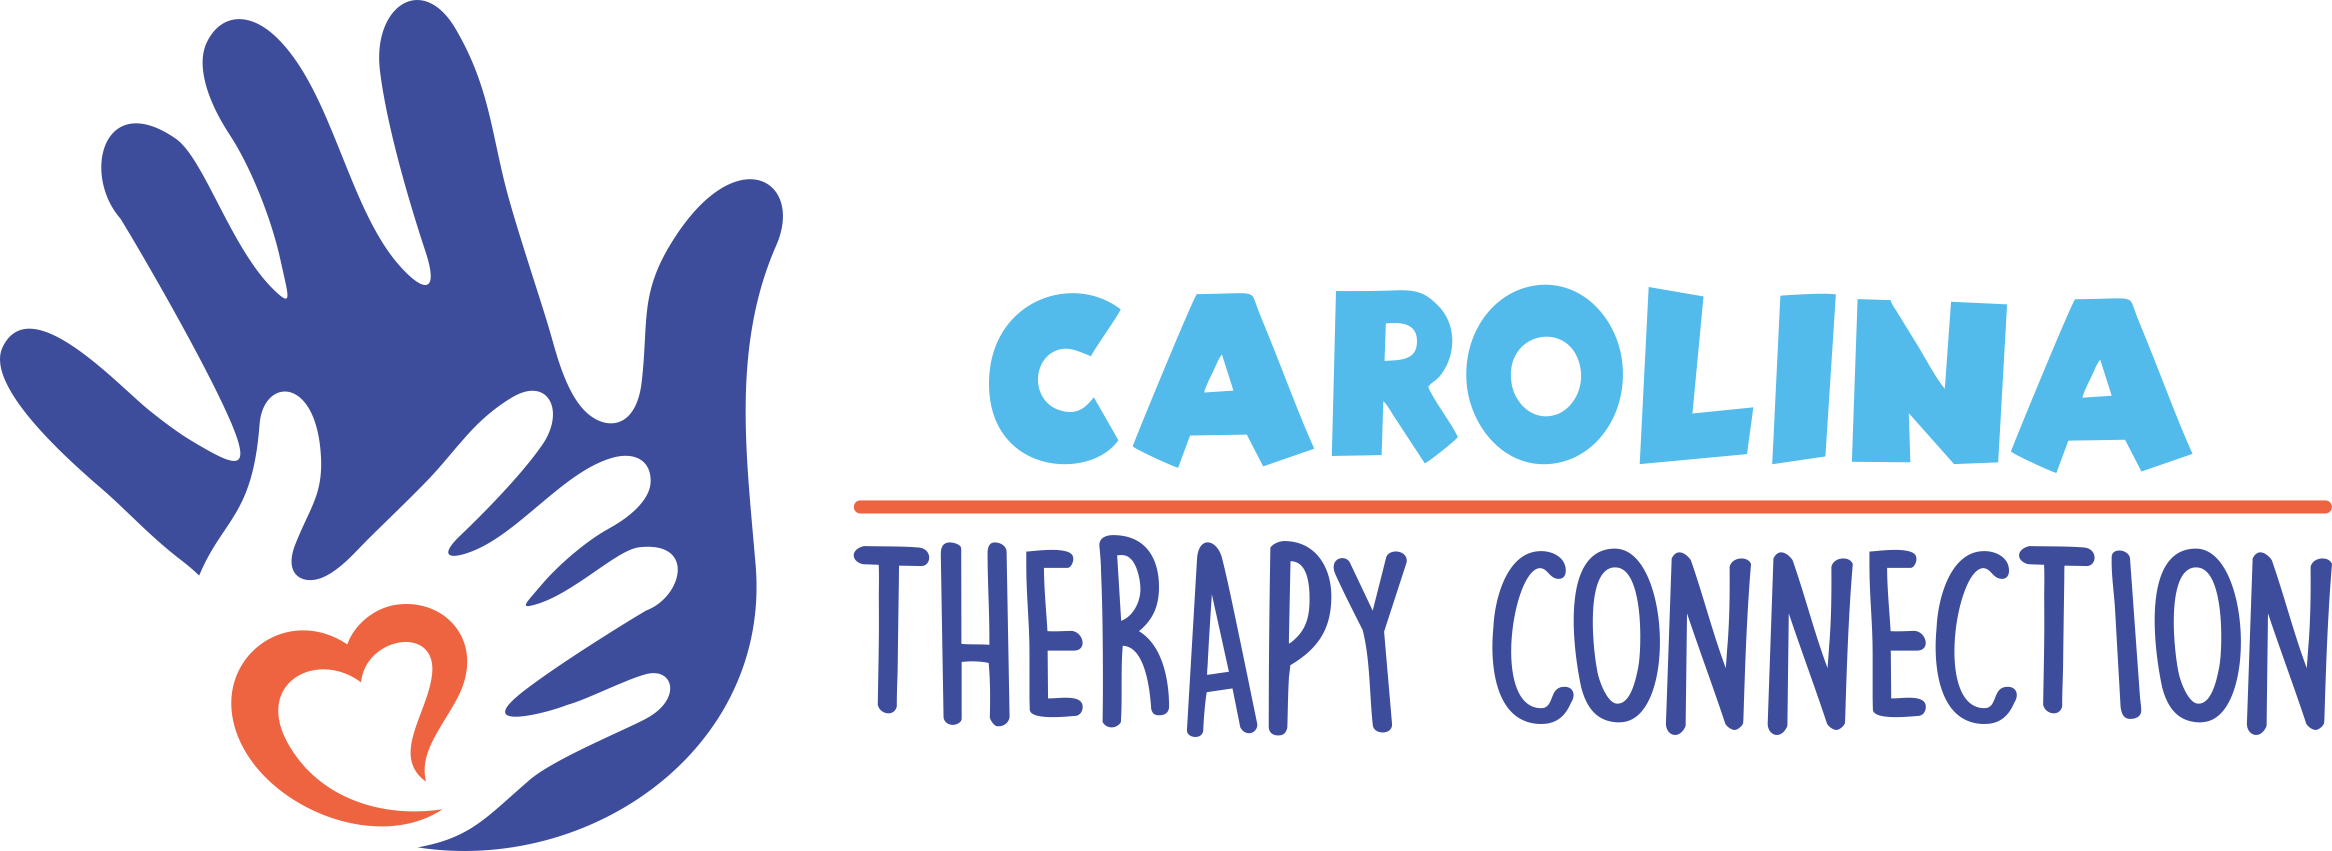 Carolina Therapy Connection logo